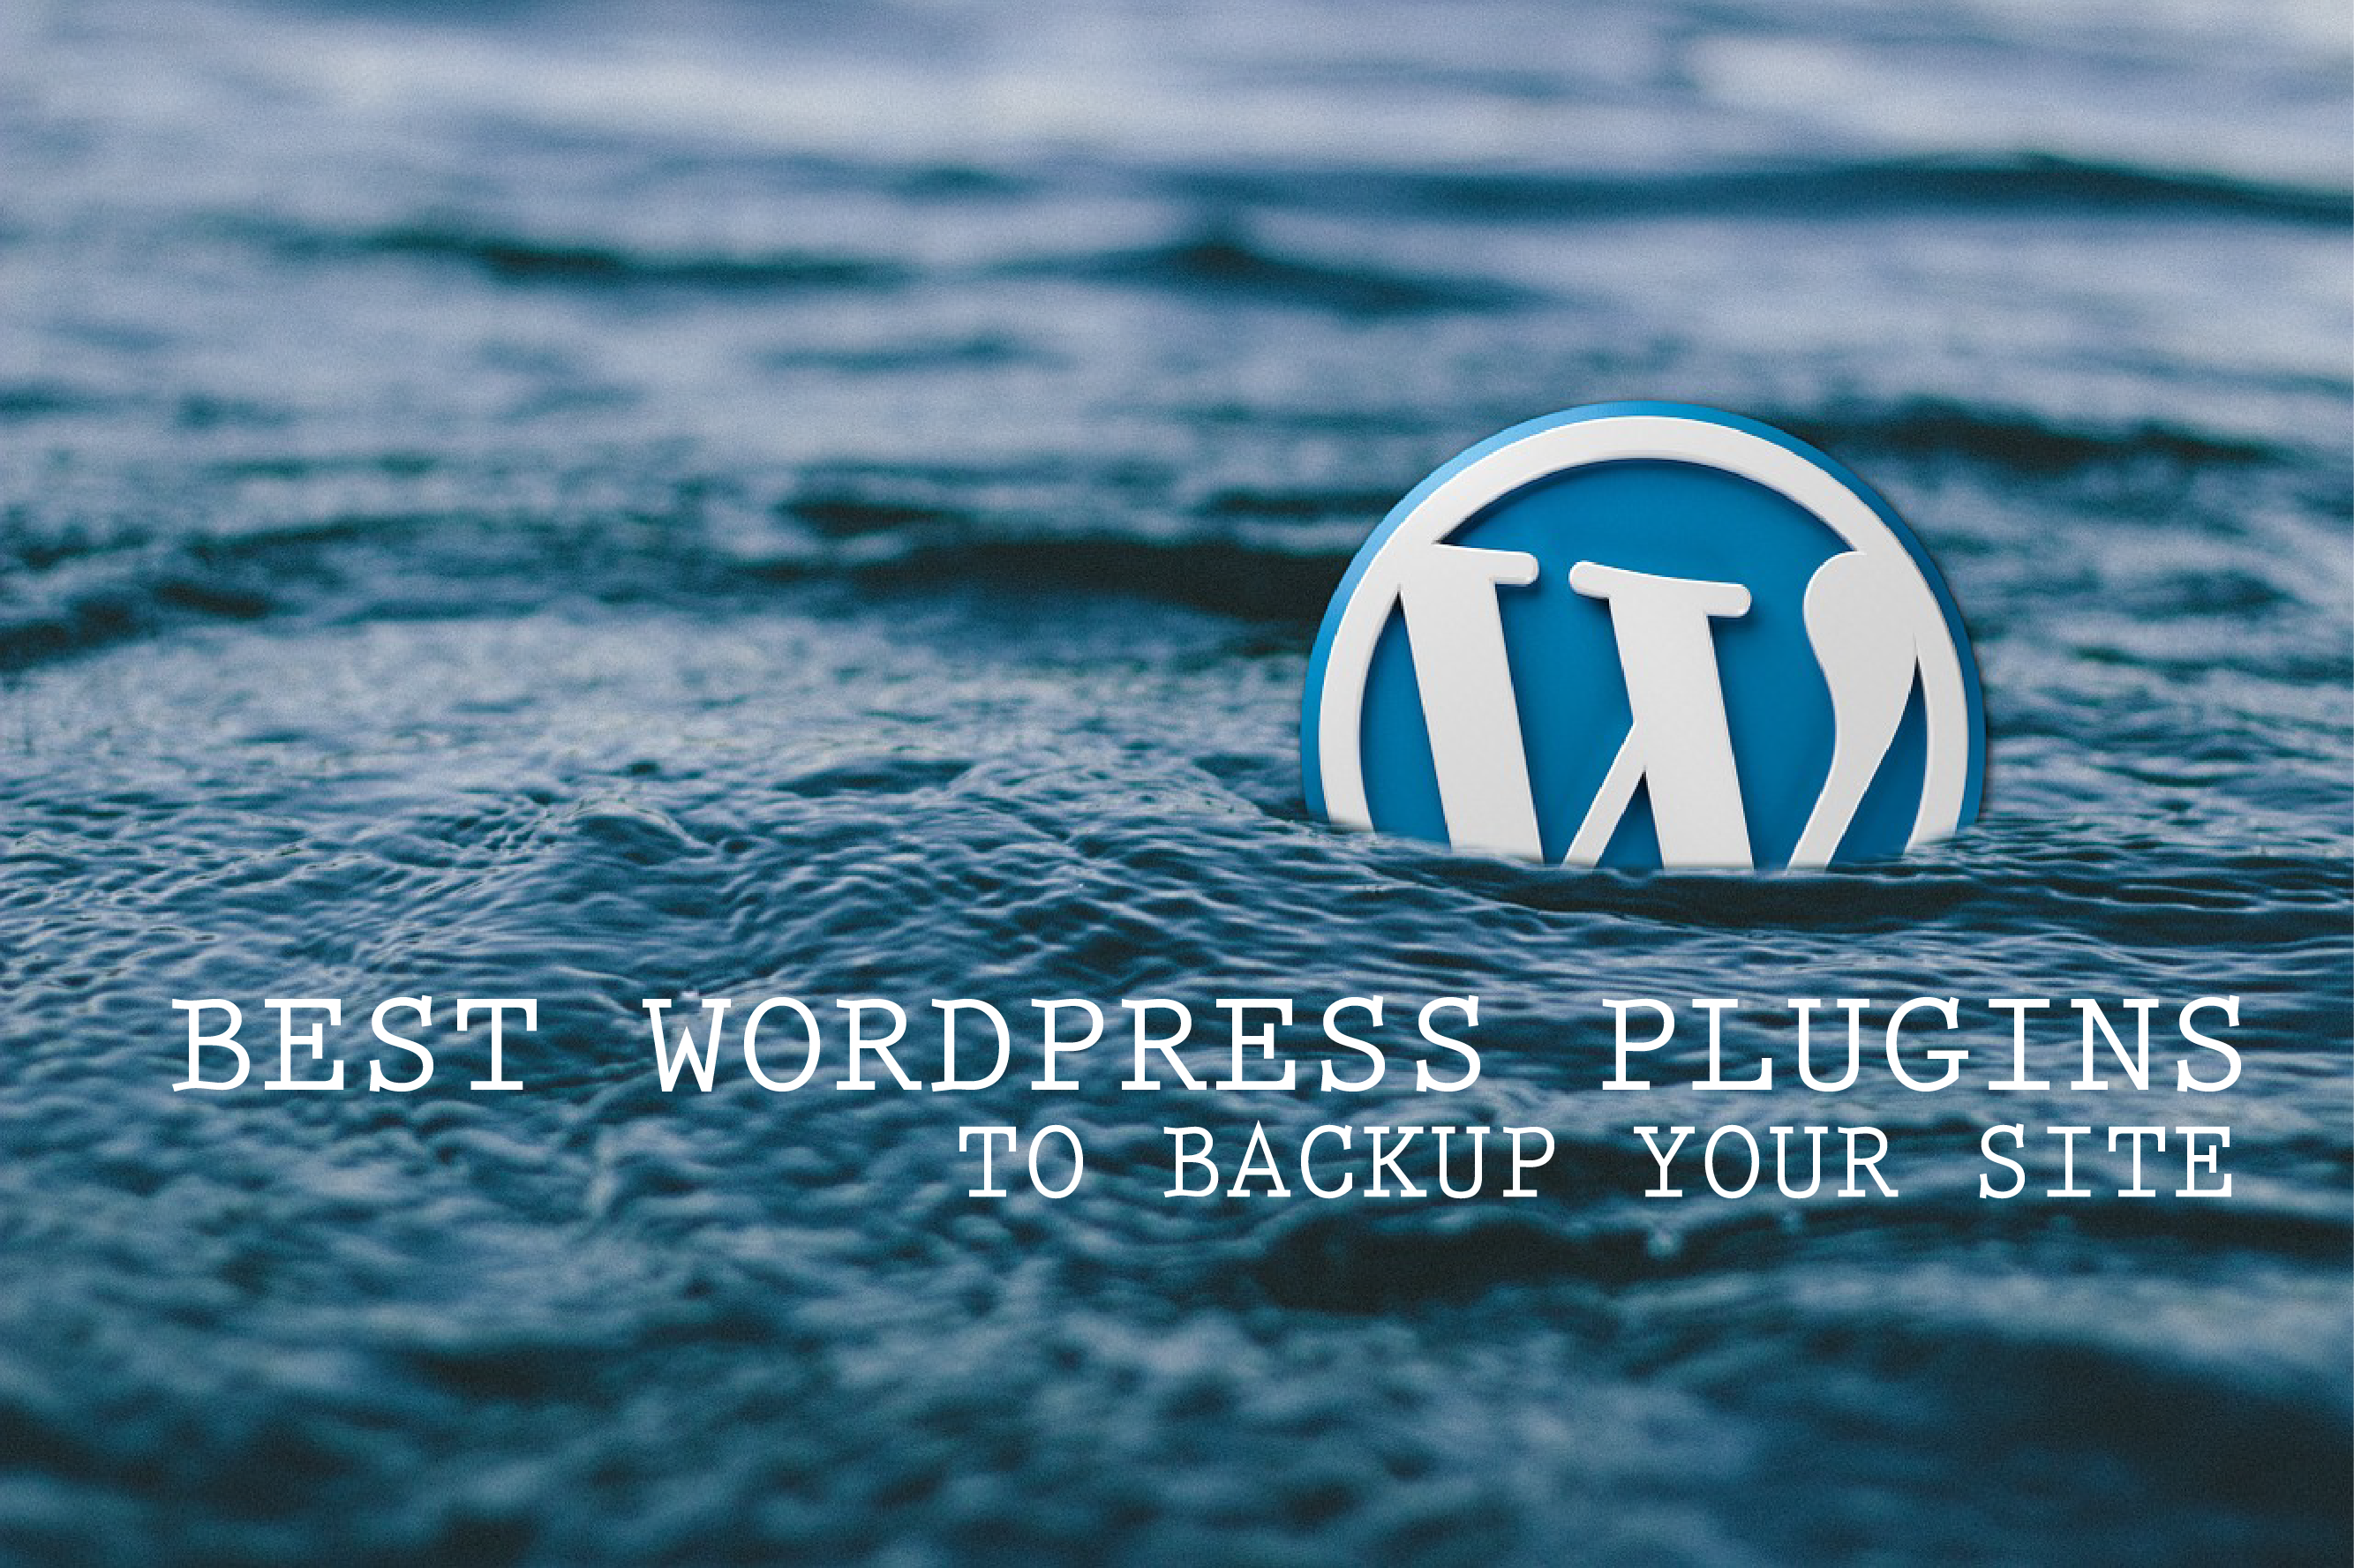 best wordpress backup plugins